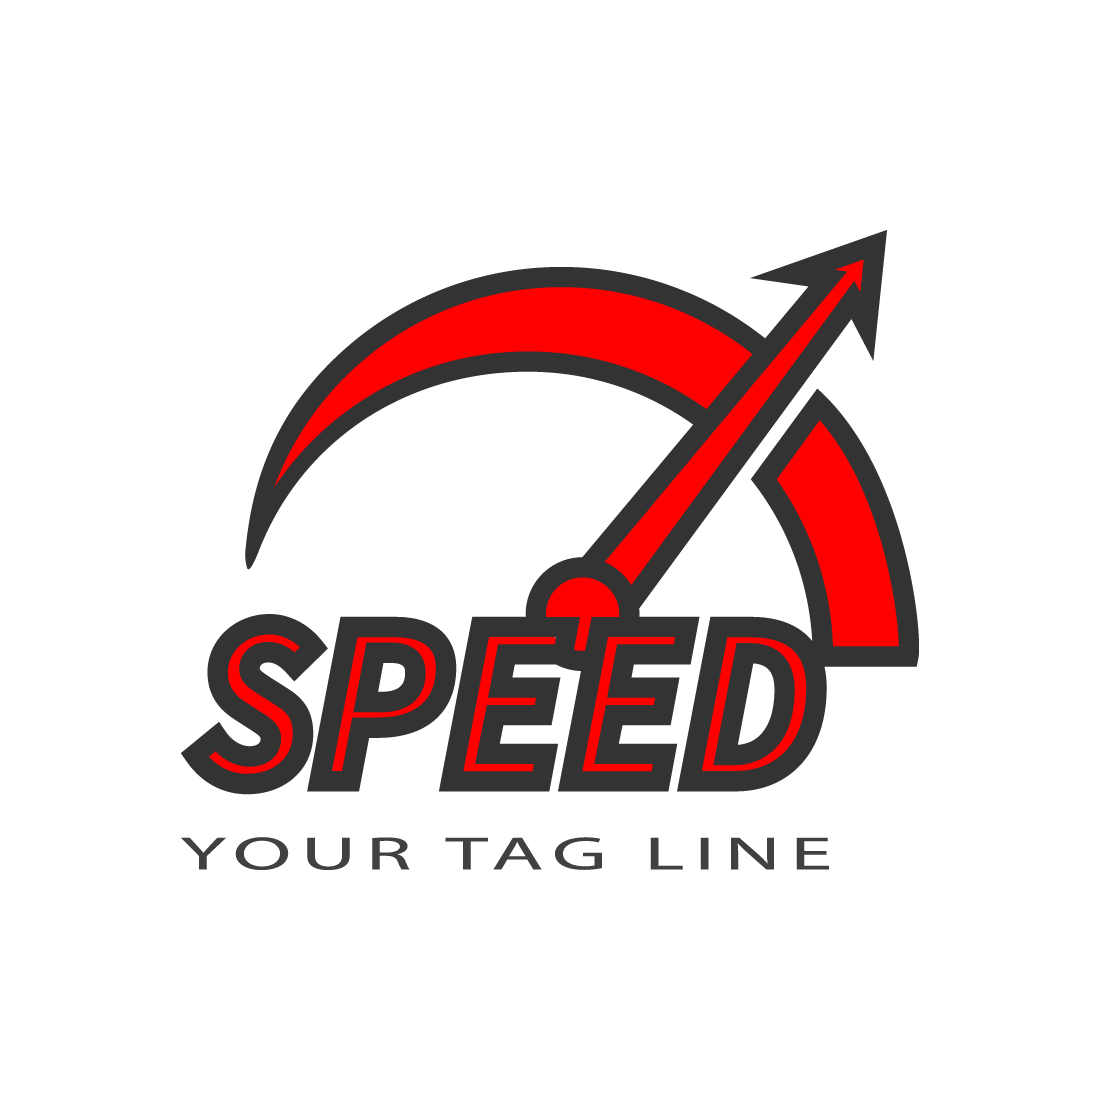 Professional HI speed logo design vector images Speed logo vector template arts Fast logo design monogram best identity, Meter logo design vector illustration preview image.